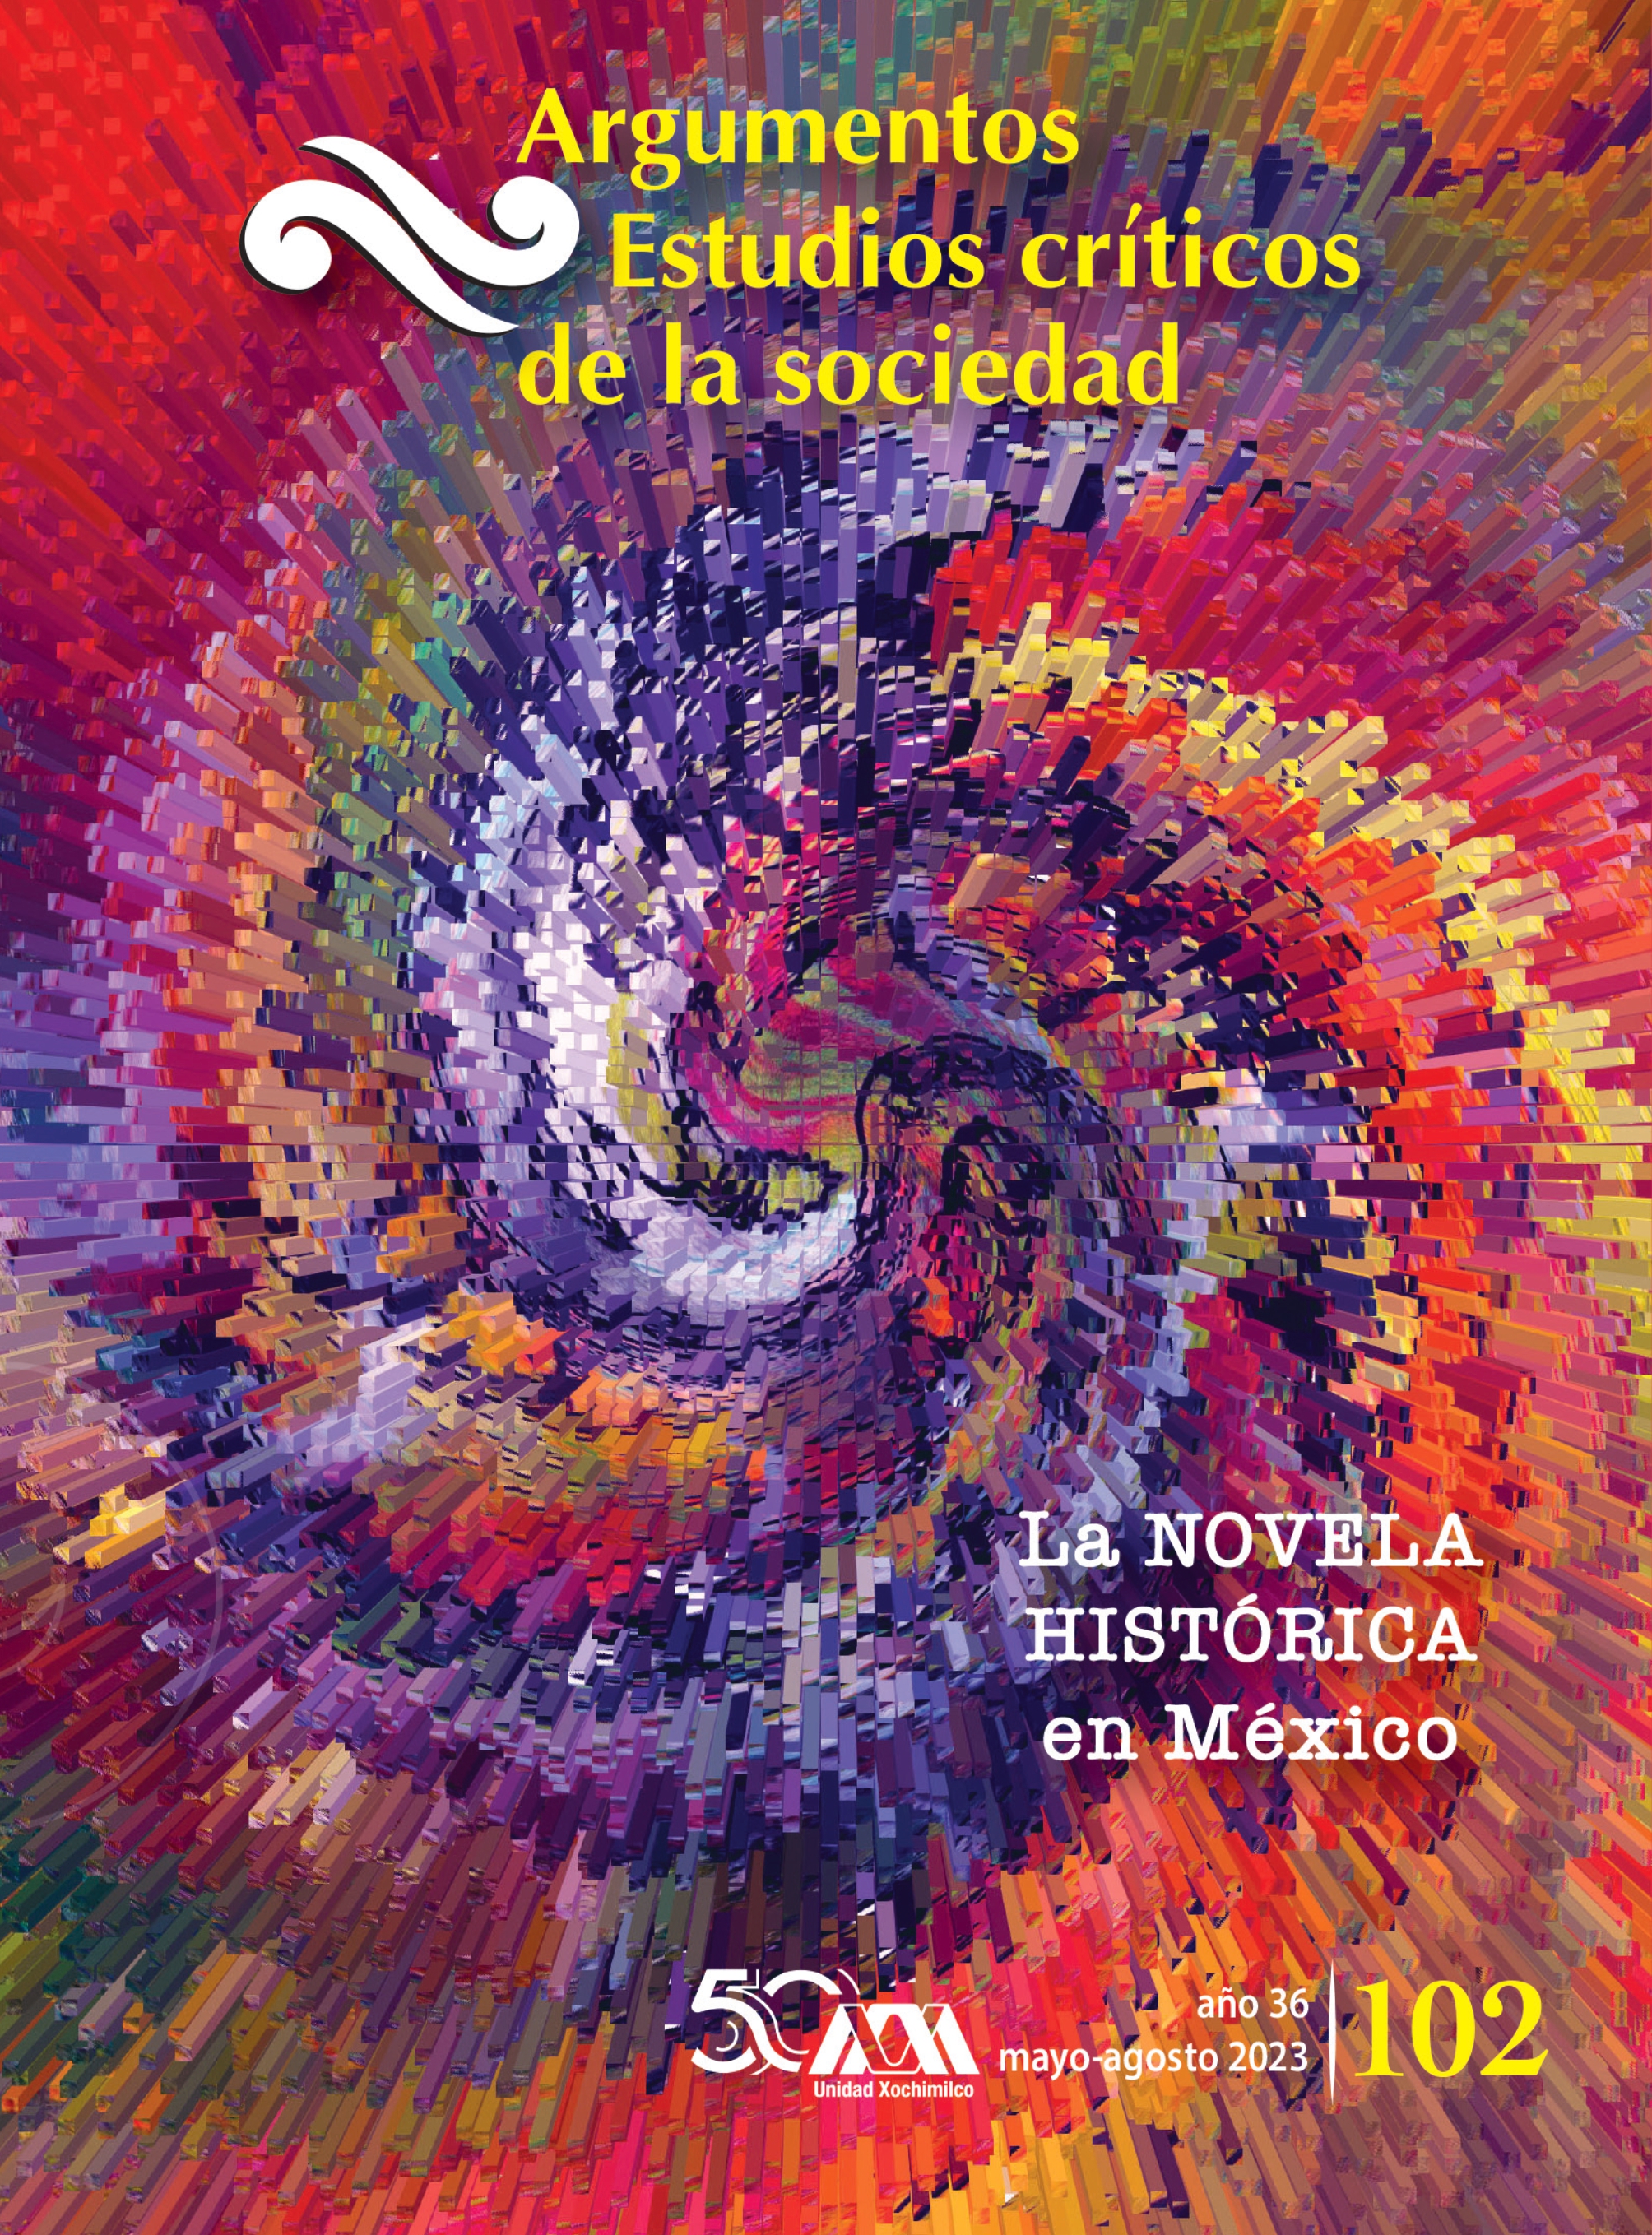 					Ver Núm. 102 "La novela histórica en México"
				